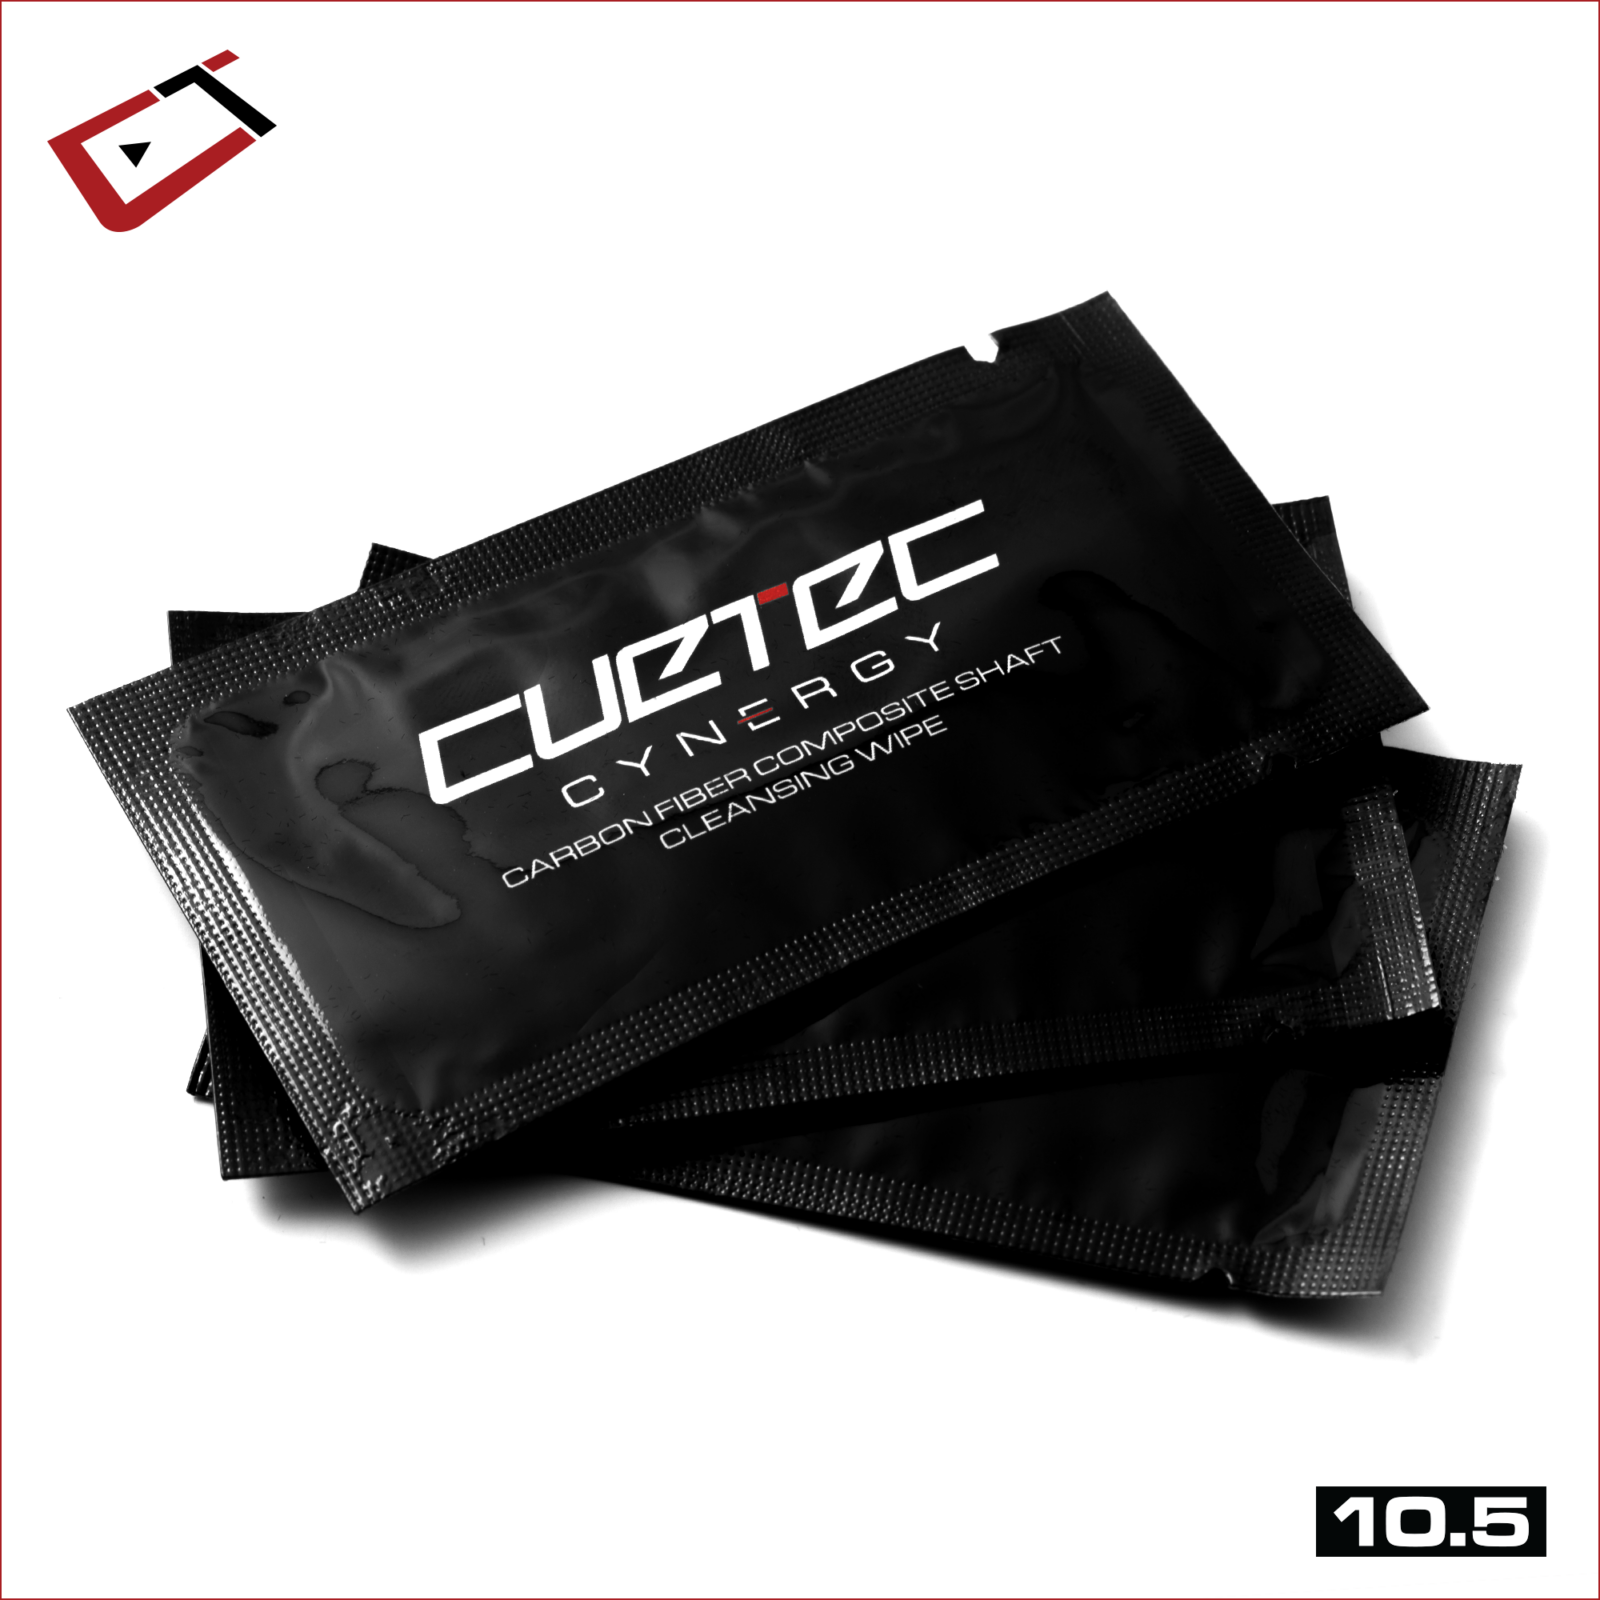 Cuetec Cynergy Shaft 10.5mm 3/8x11 95-028T Wipes